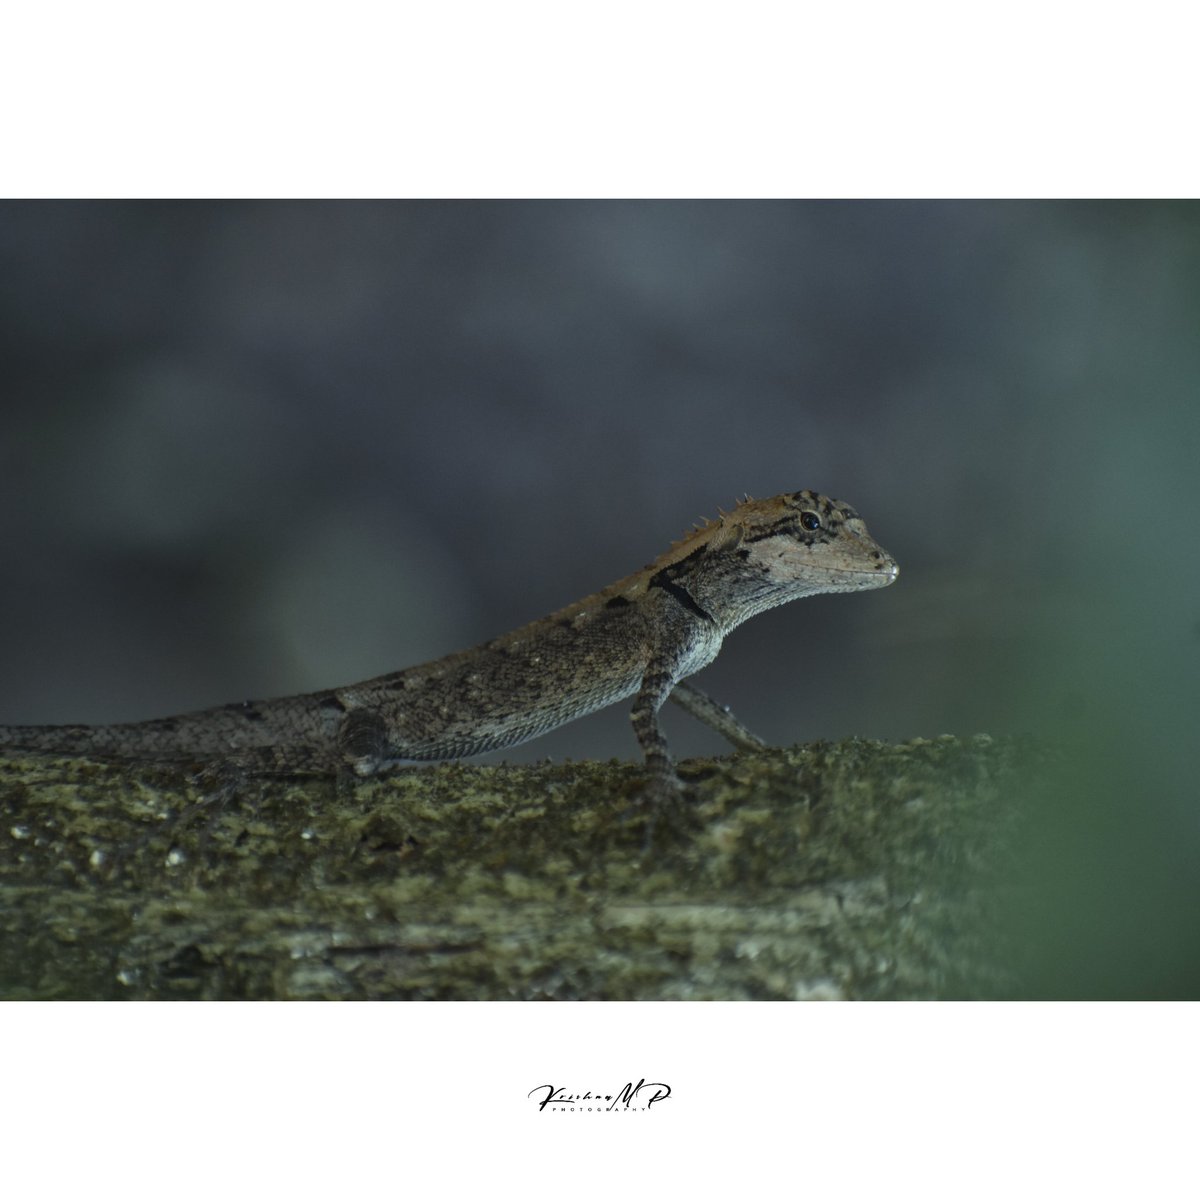 Lizard 🦎
.
.
#wildlife #lizard #nature #landsacape #nikonphotography #nikonindia #nikonfamily #shotonnikon #netgeoyourshot #bbctravel #krishna_m_p #2023